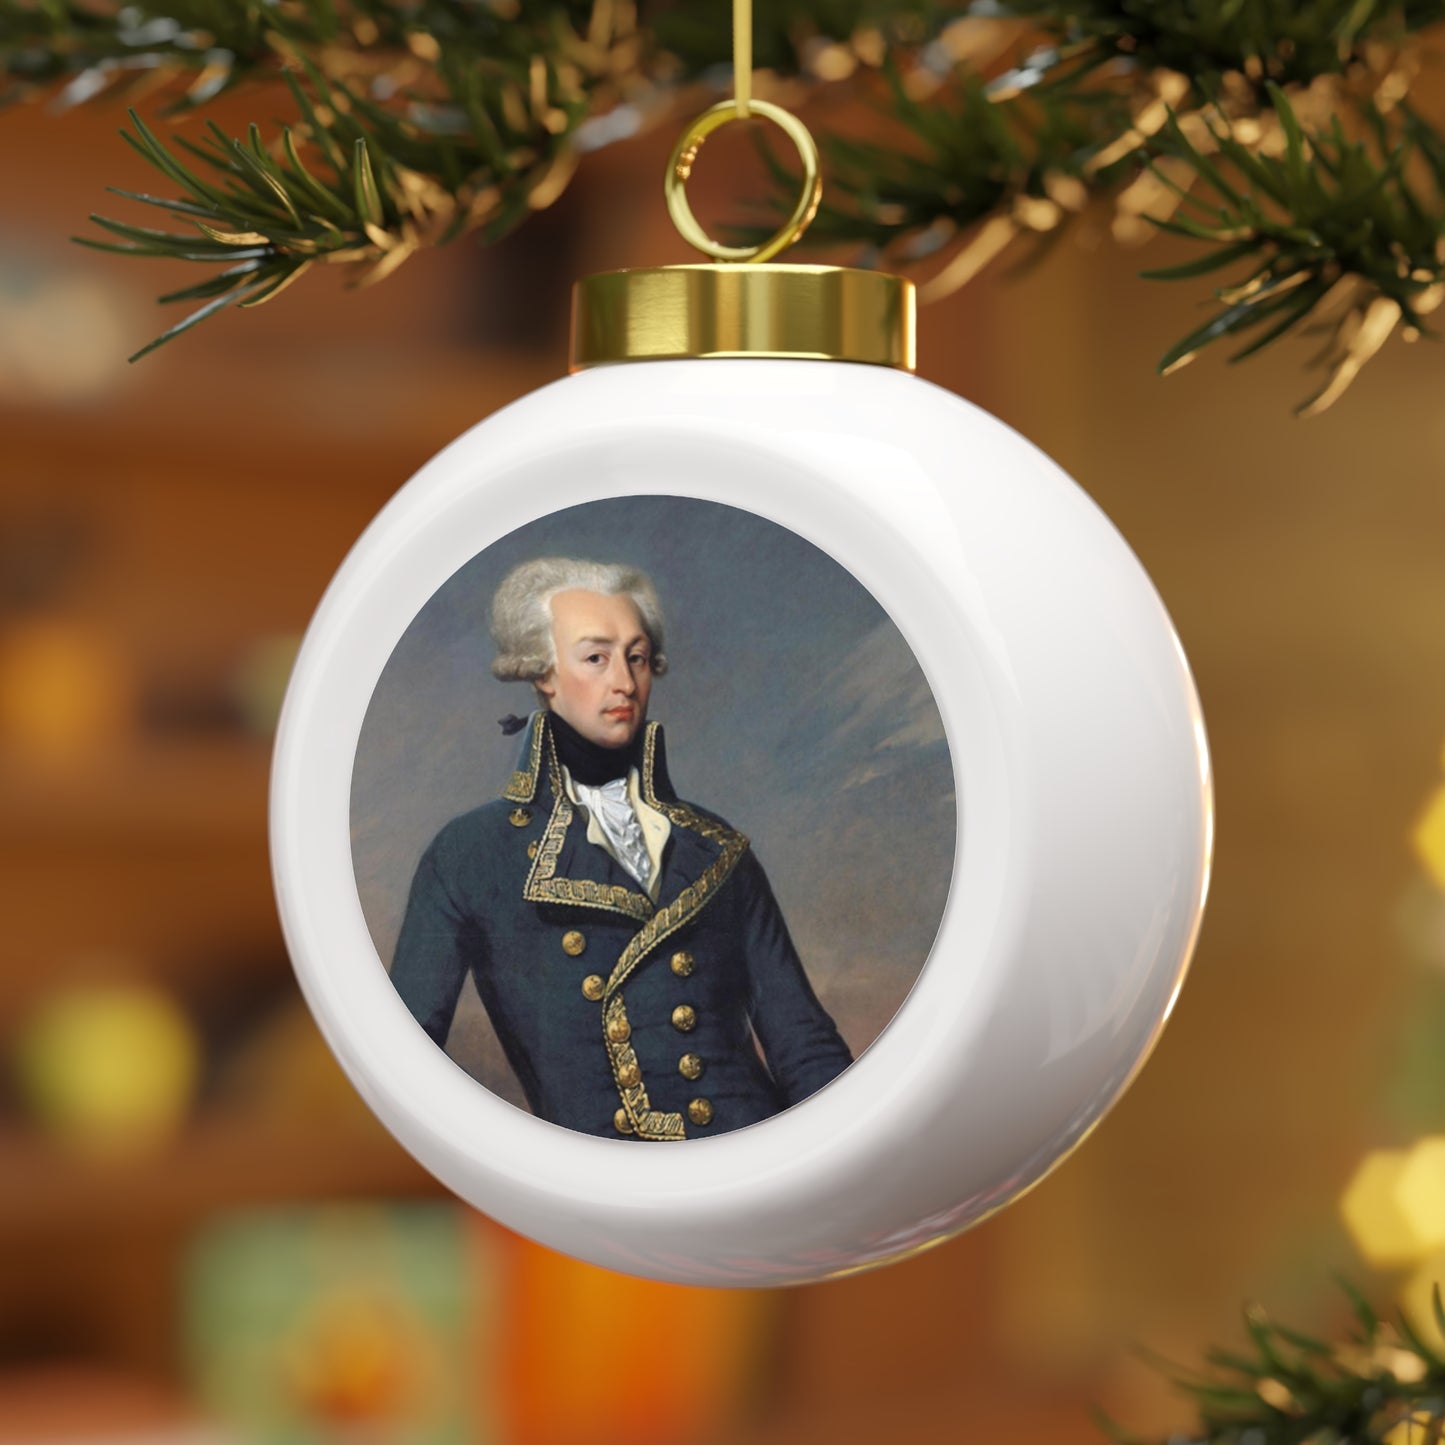 Lafayette Christmas Ball Ornament - Marquis de Lafayette